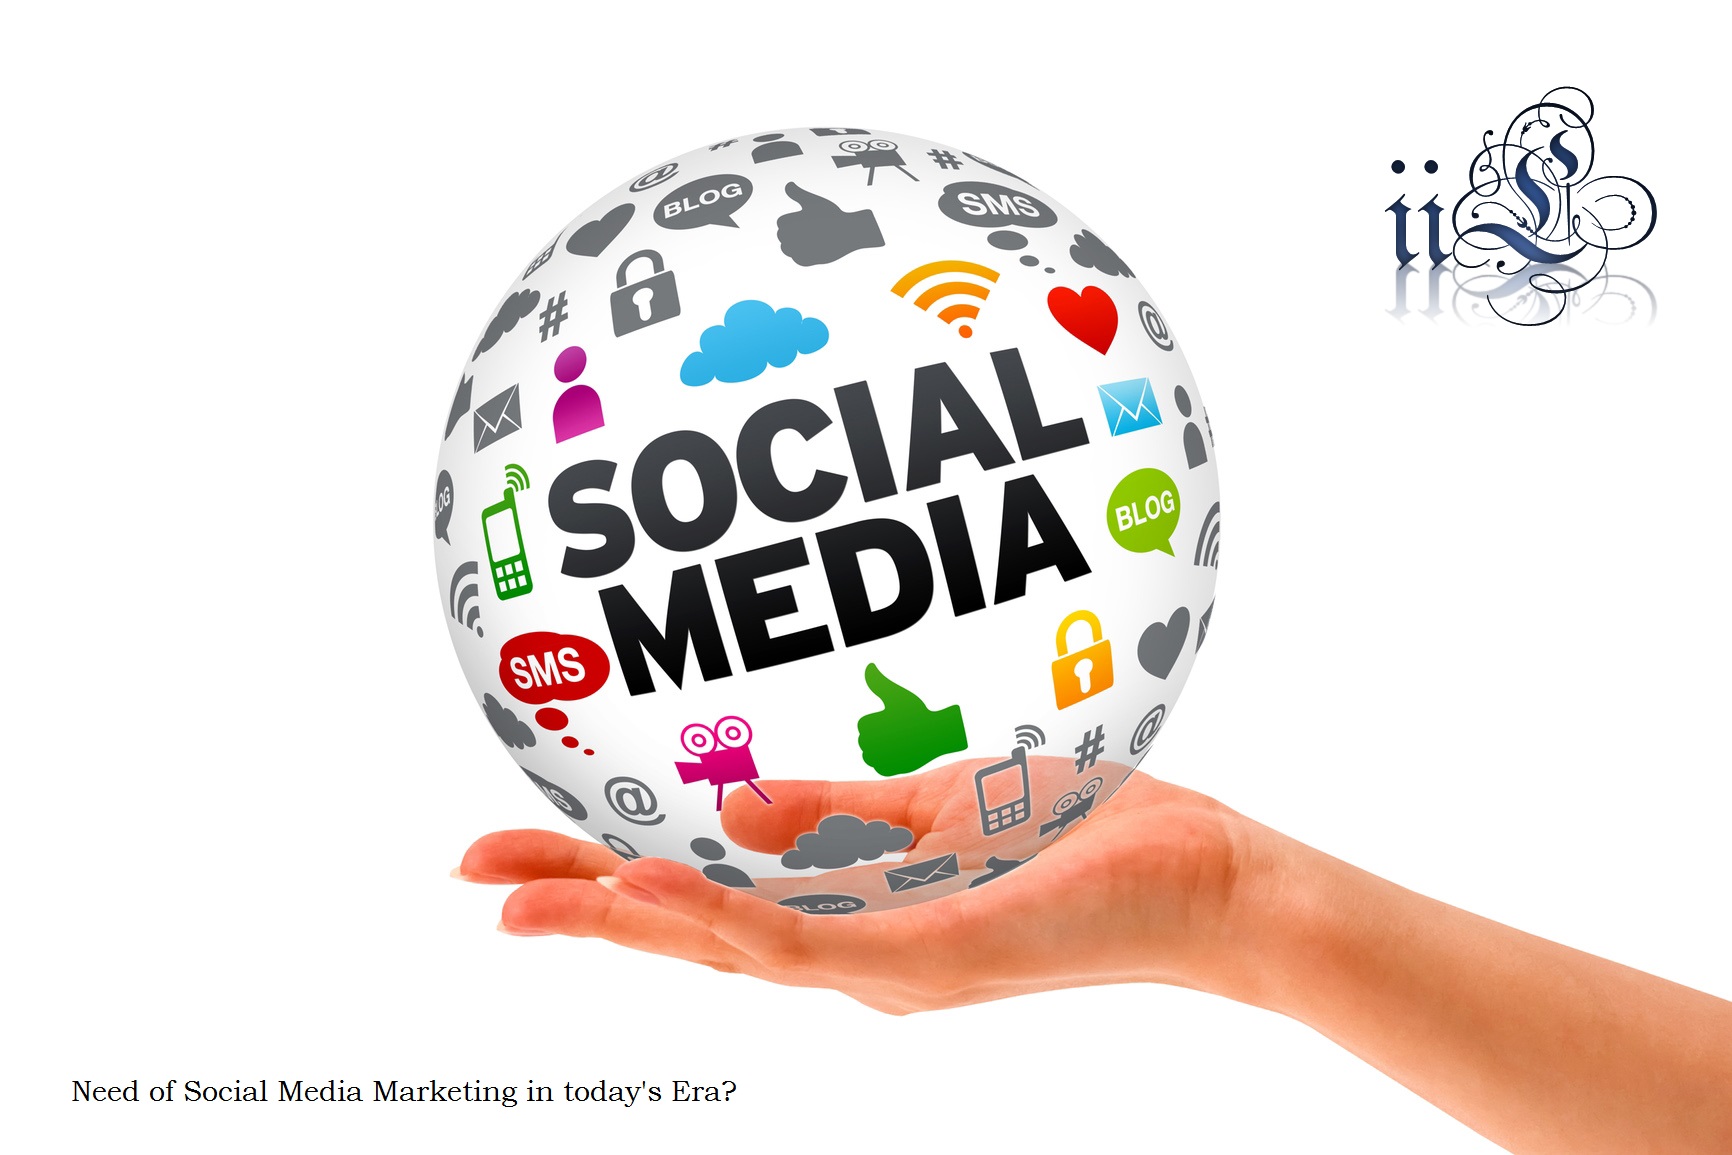 Need of Social Media Marketing in today’s era?